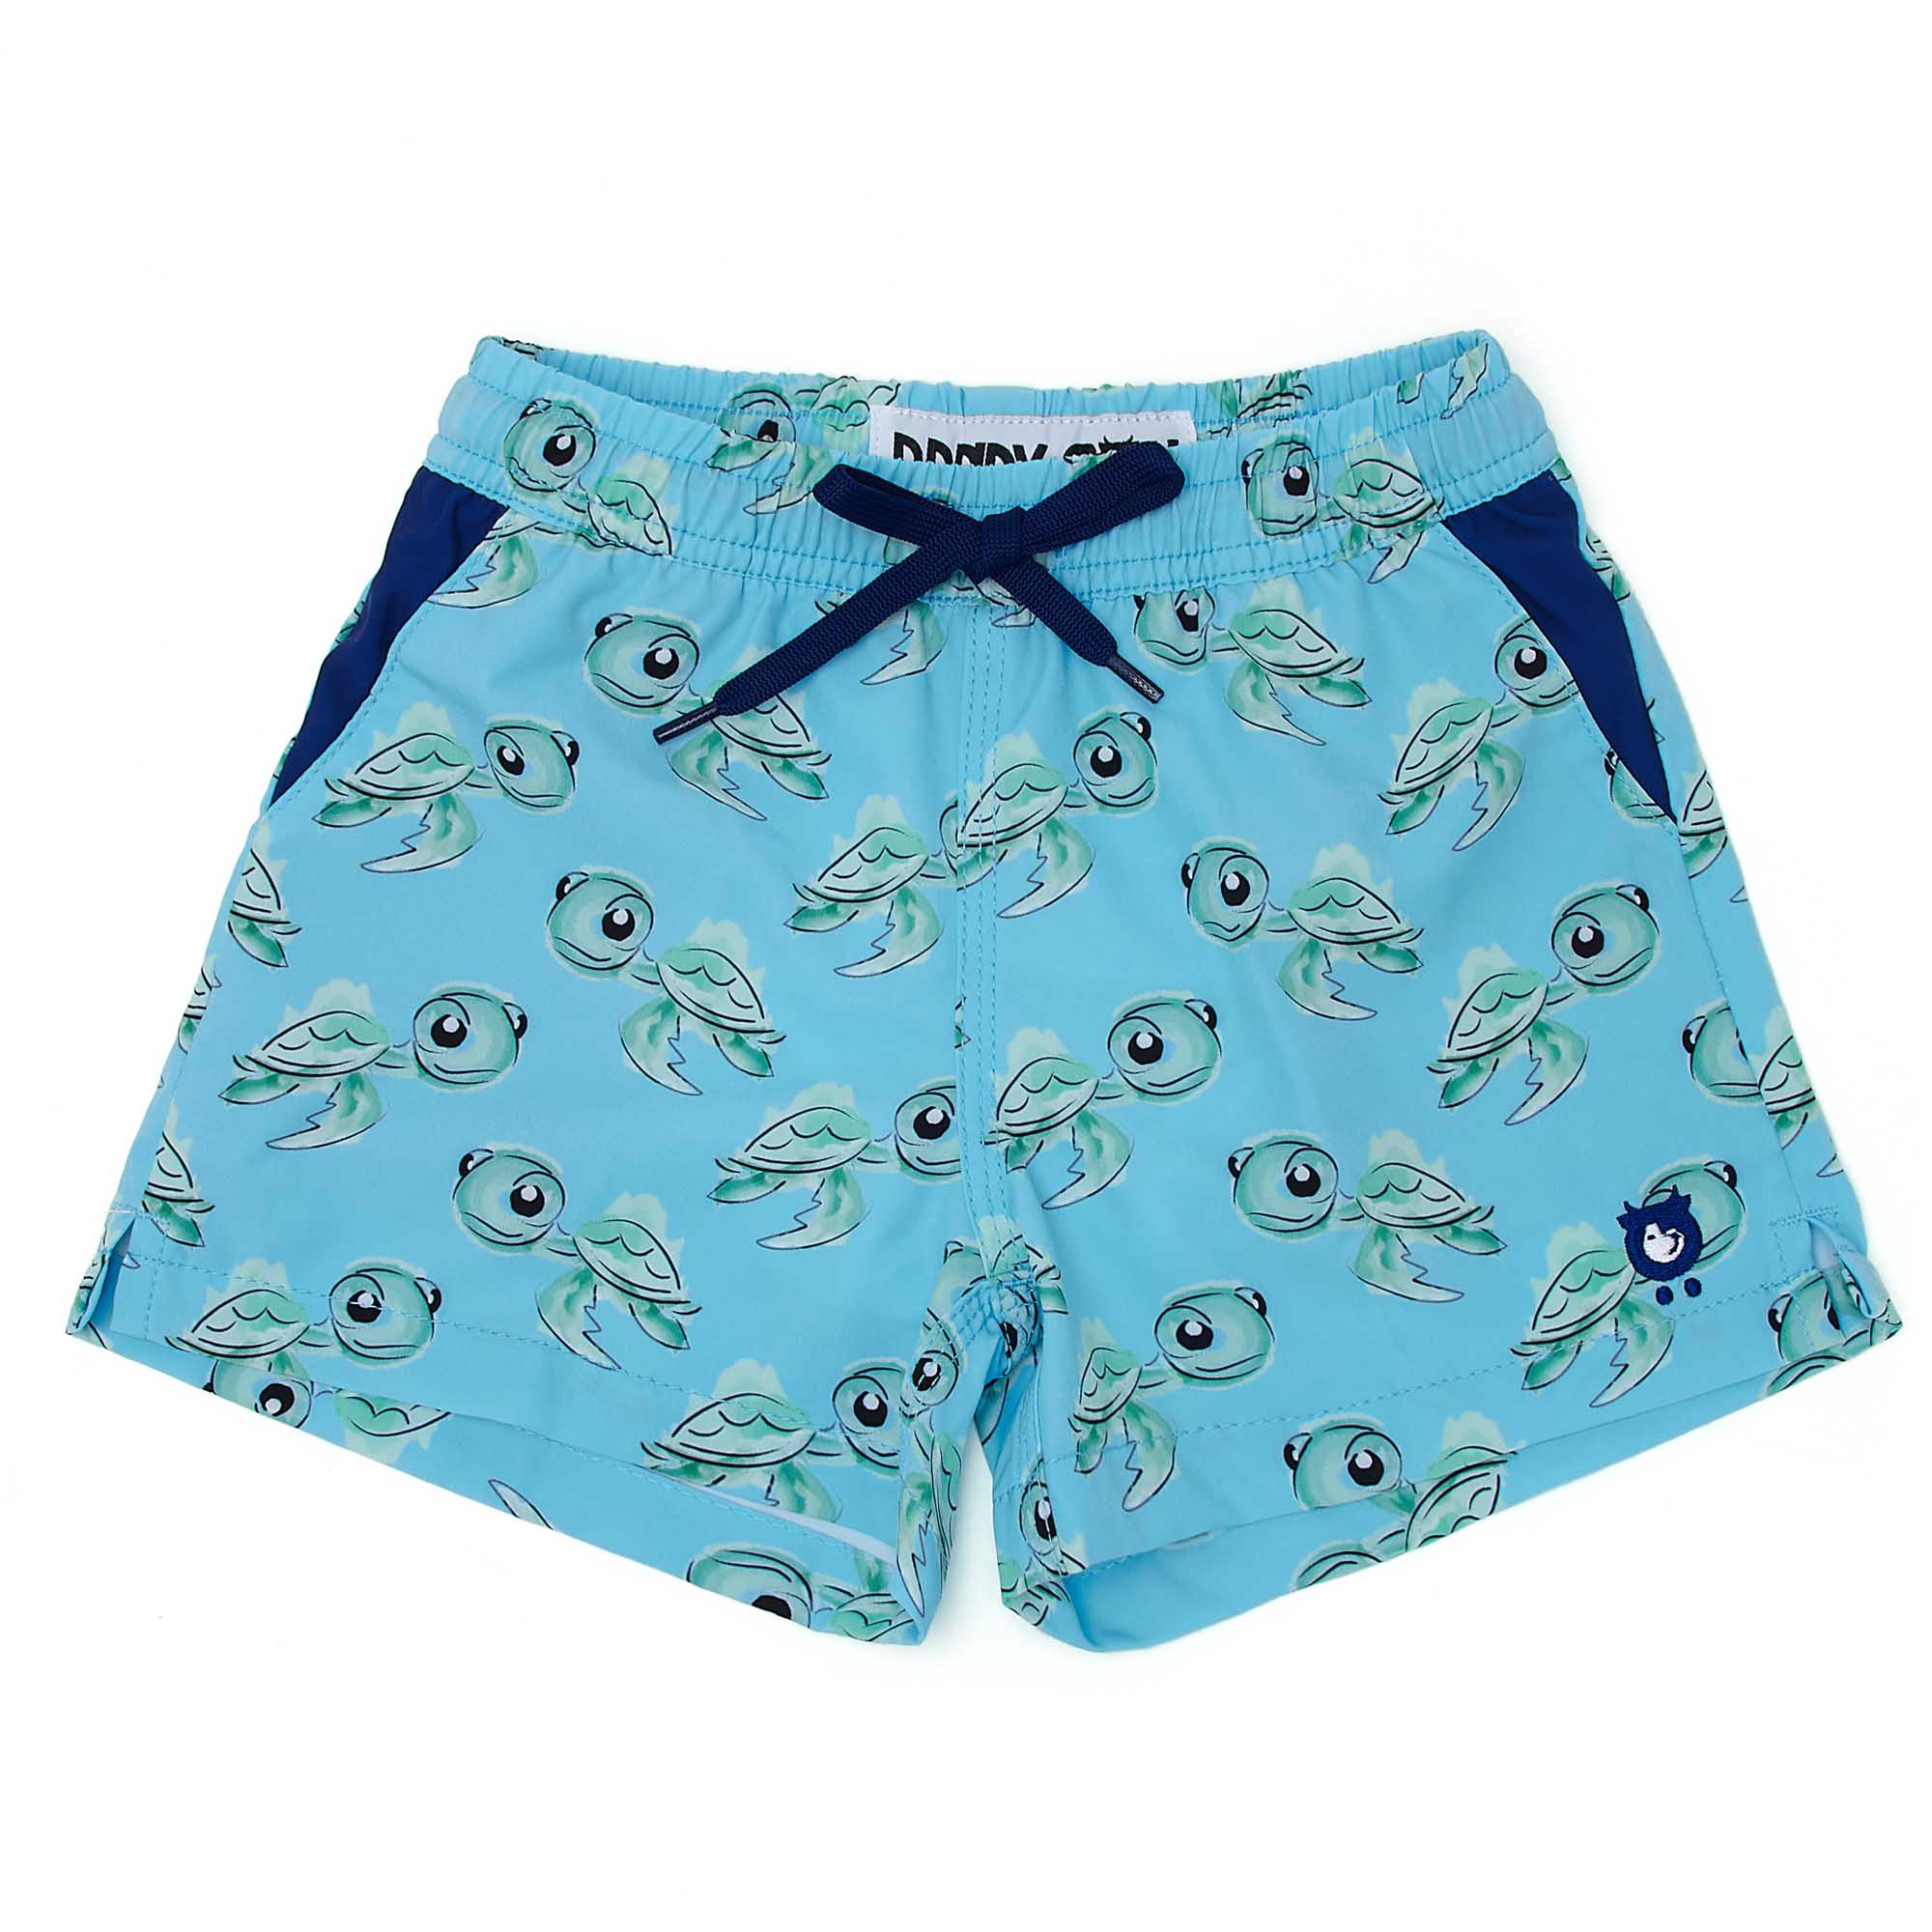 Turtles - Kid's Swim Shorts